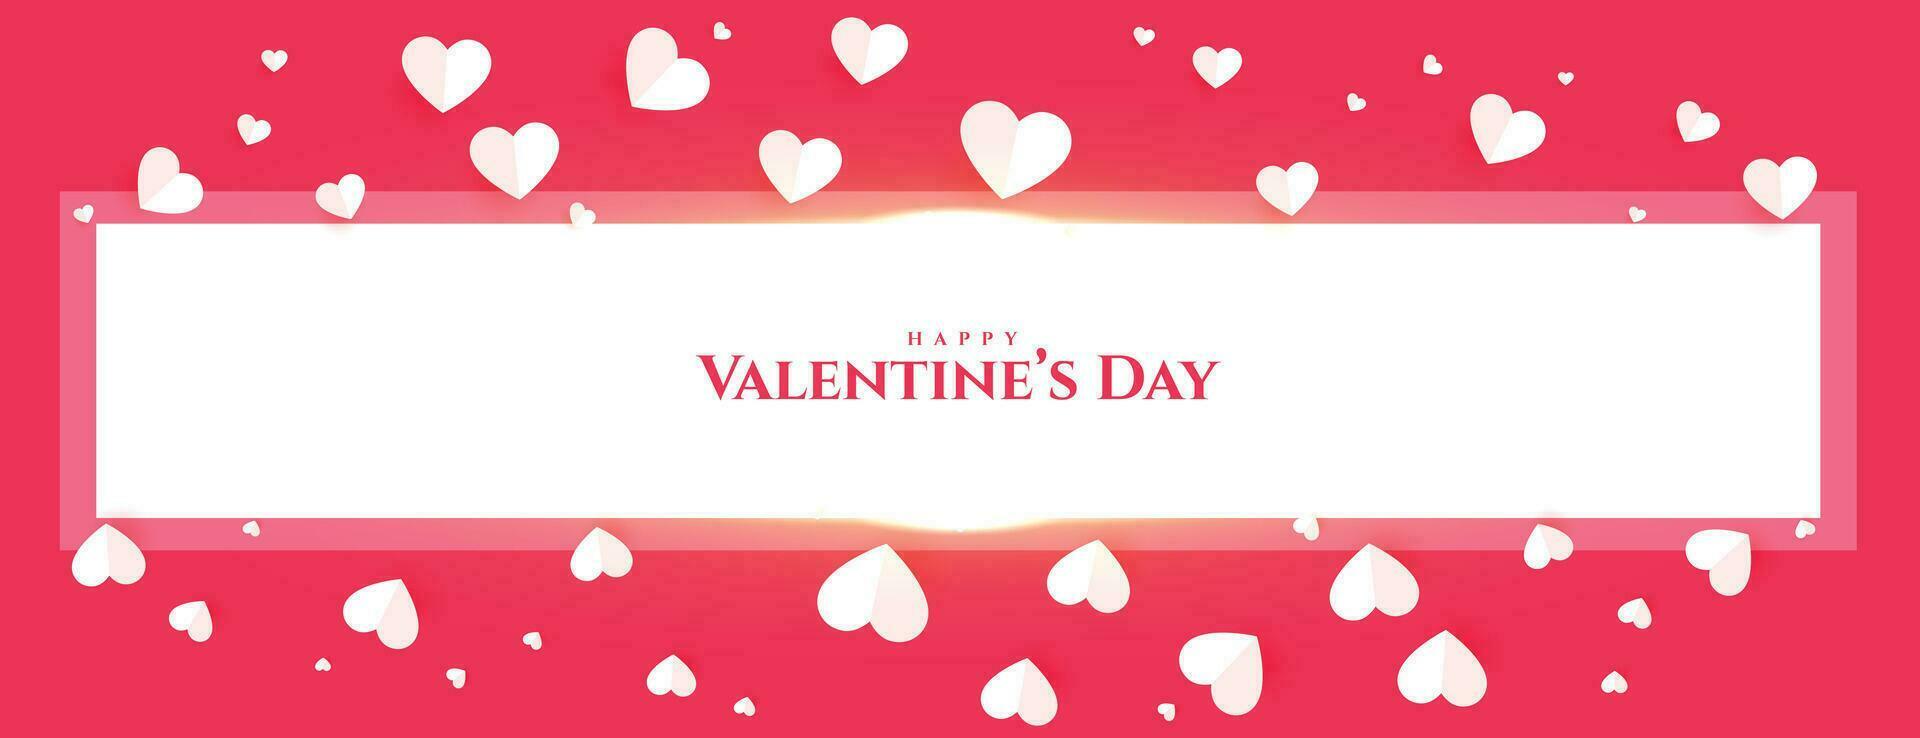 romantic valentines day hearts banner design vector